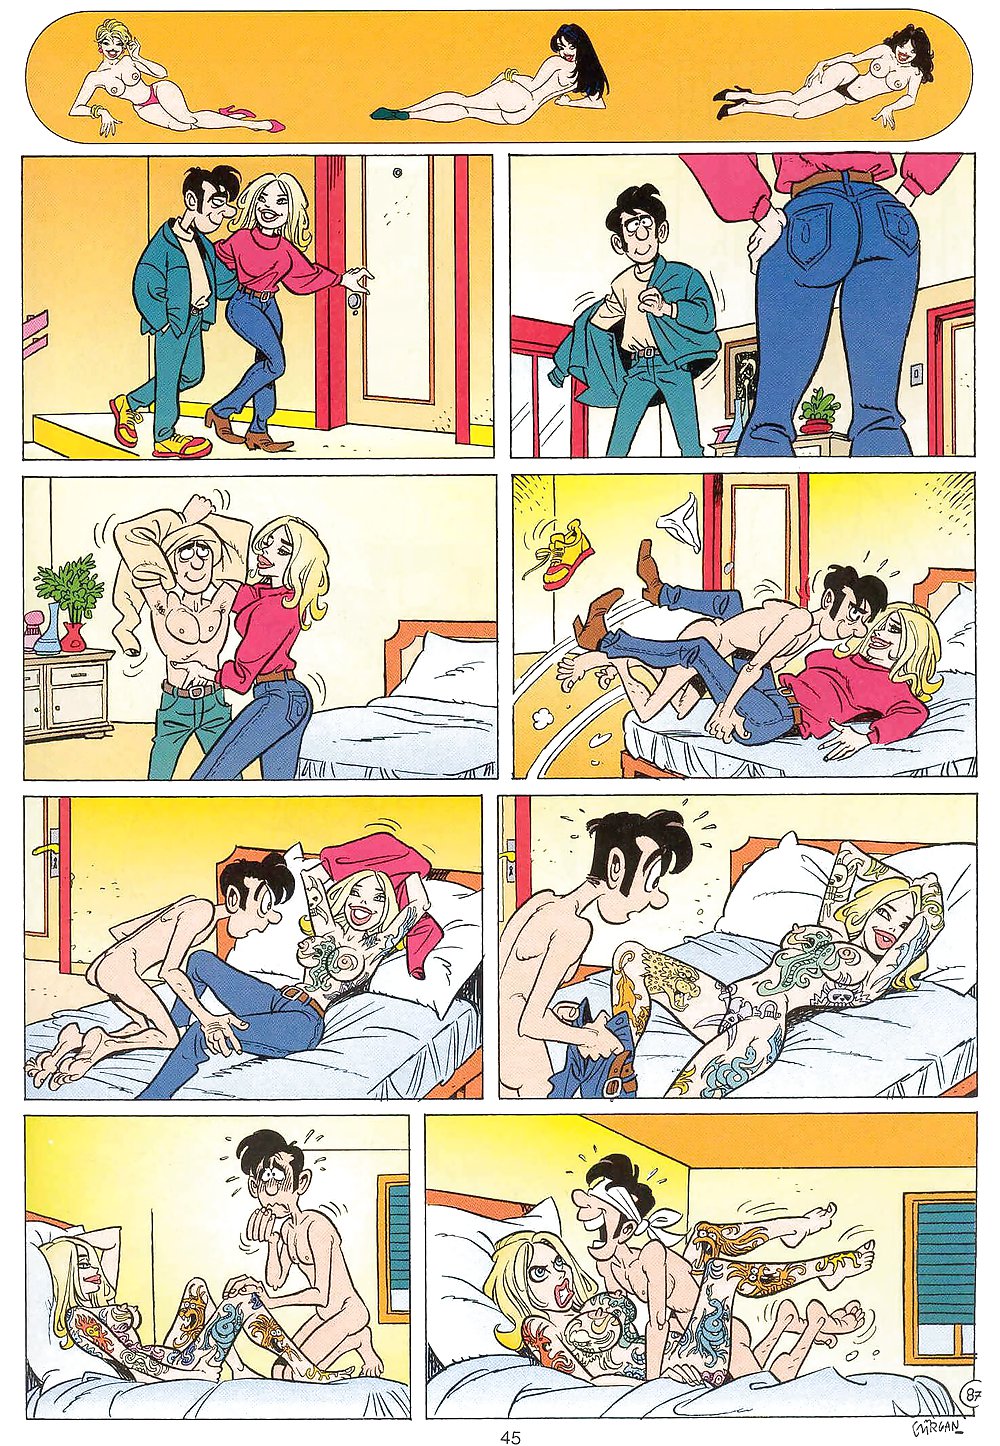 Sex comic strips